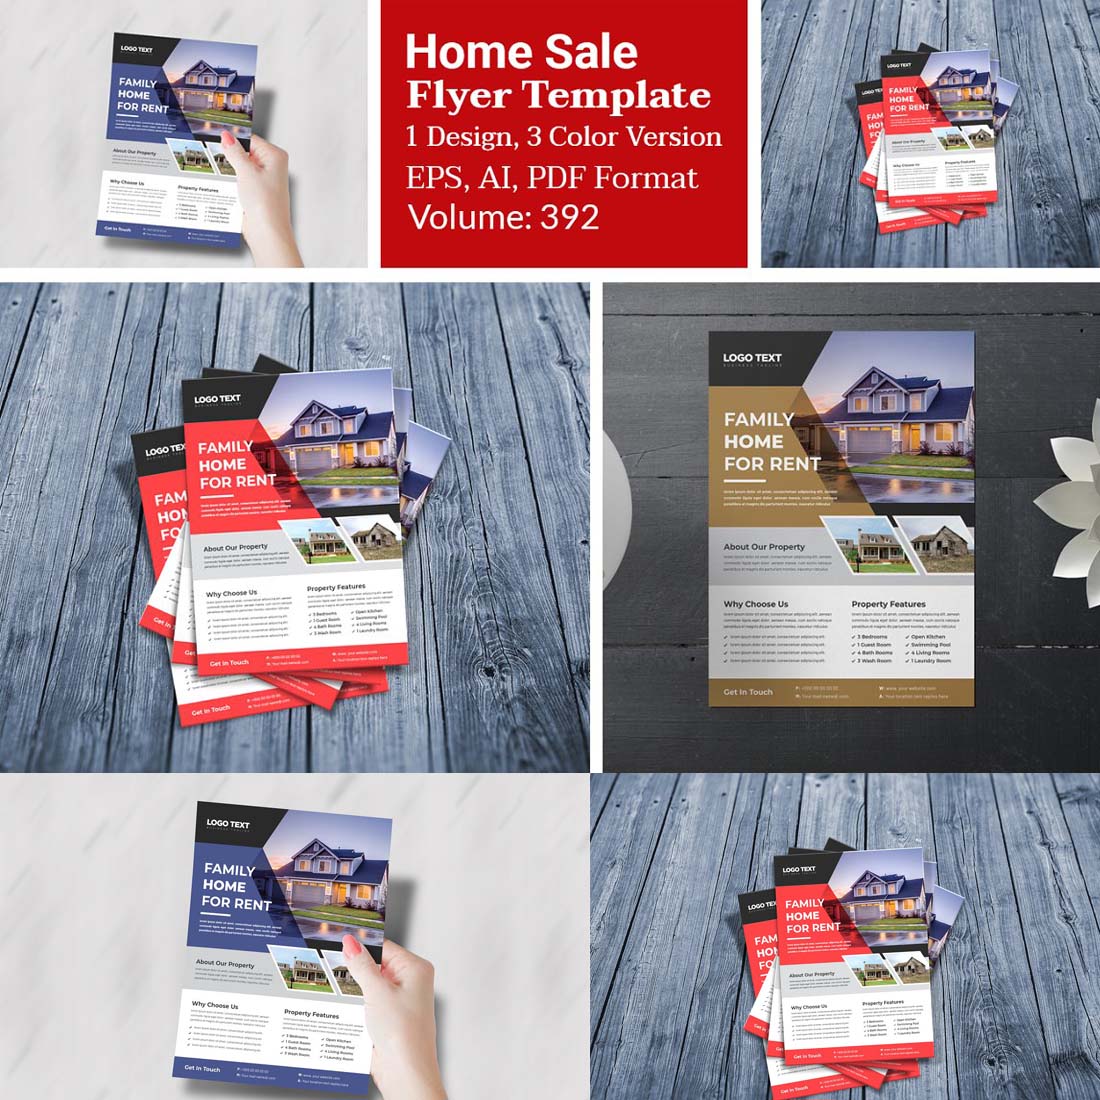 Real Estate Flyer Design For Home cover image.